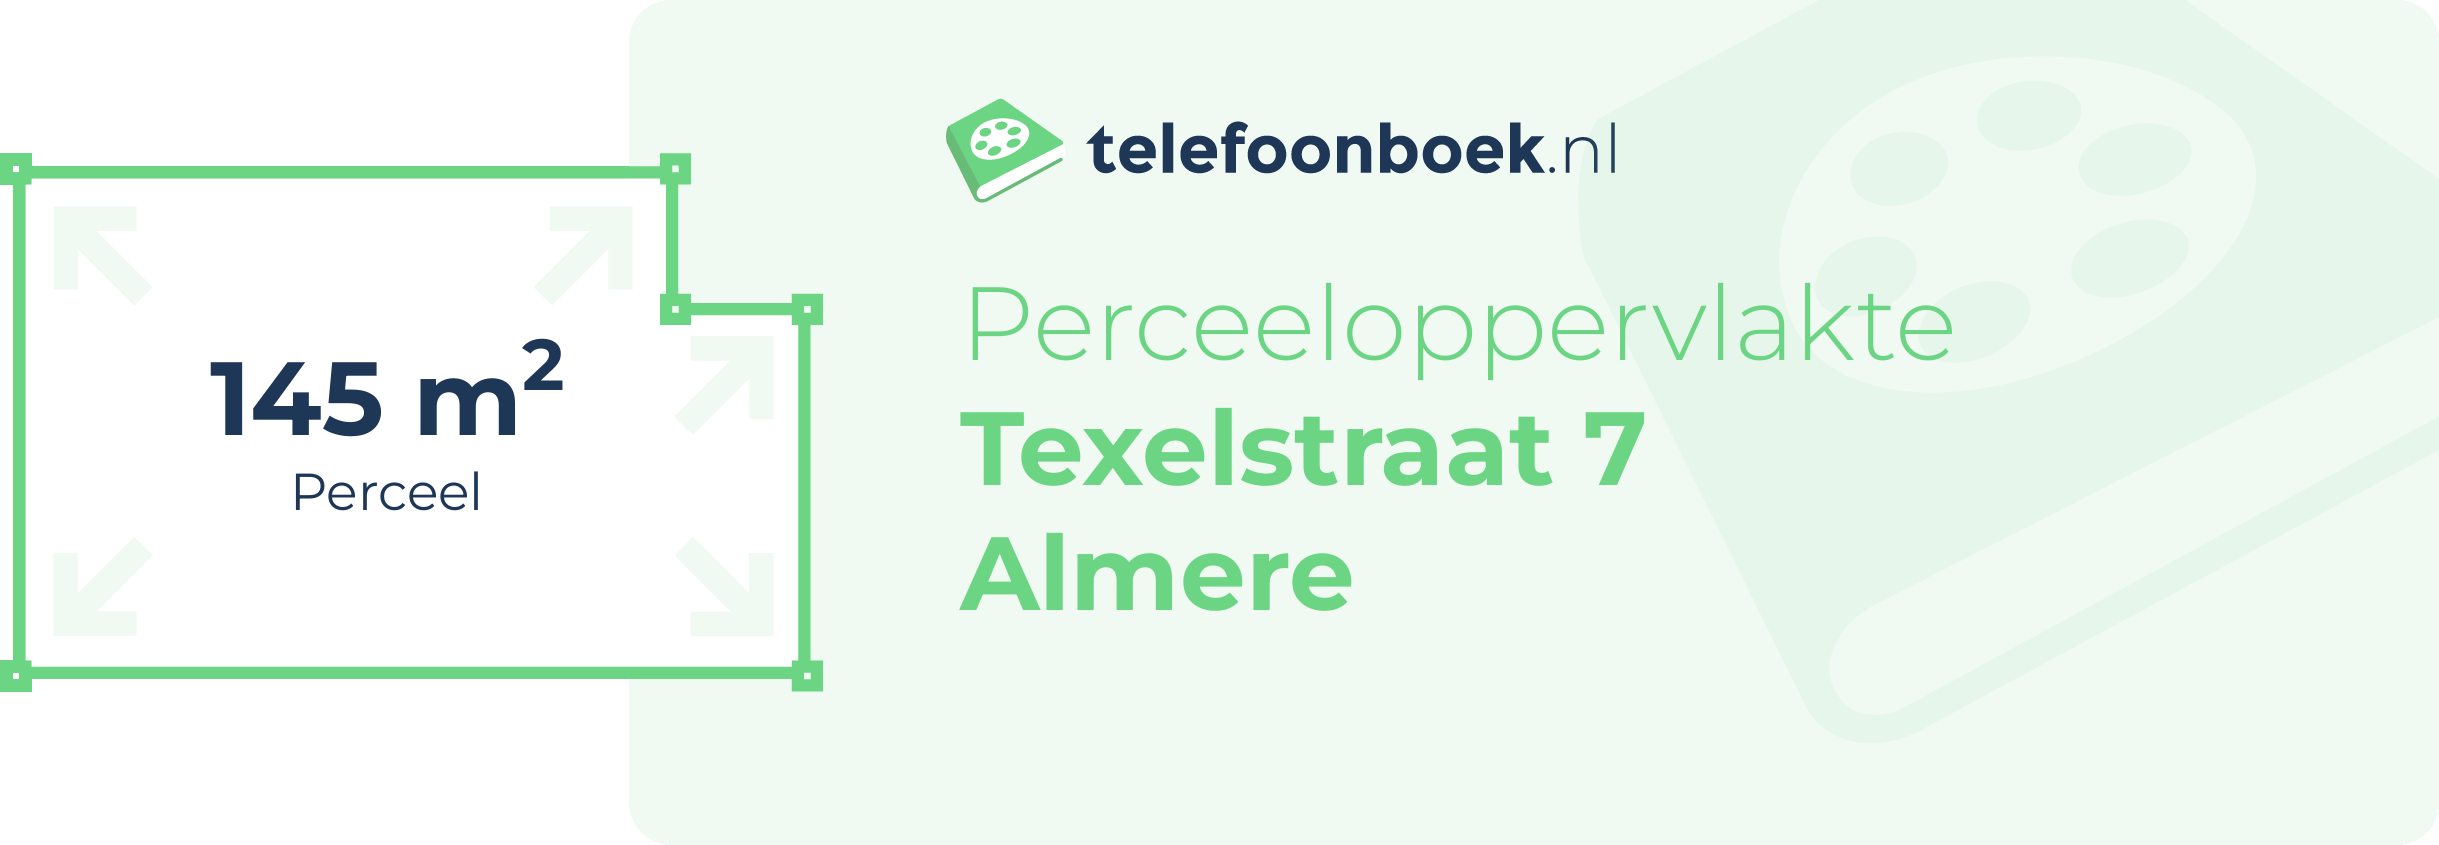 Perceeloppervlakte Texelstraat 7 Almere